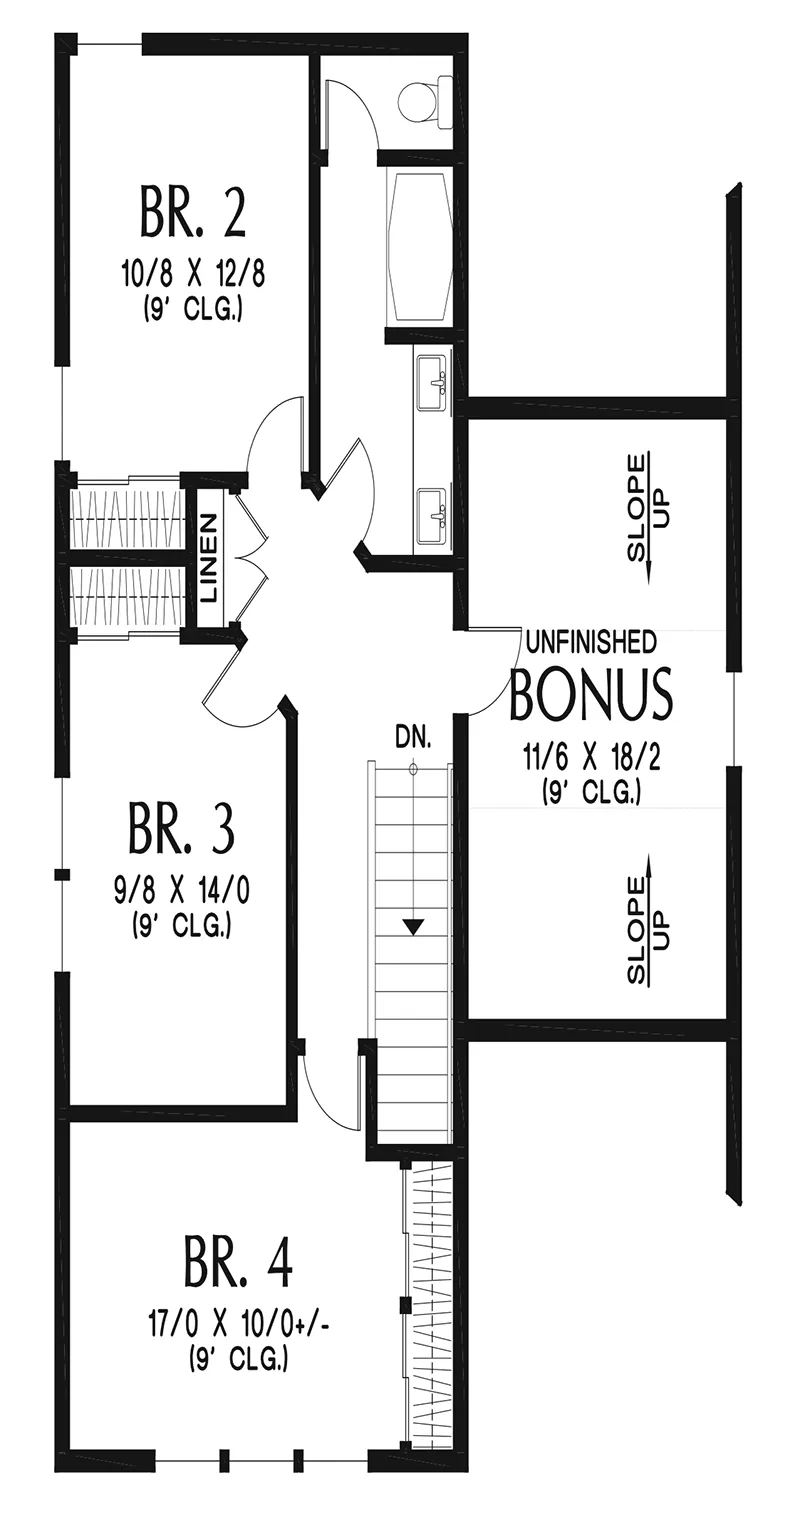 European House Plan Second Floor - 011D-0715 - Shop House Plans and More